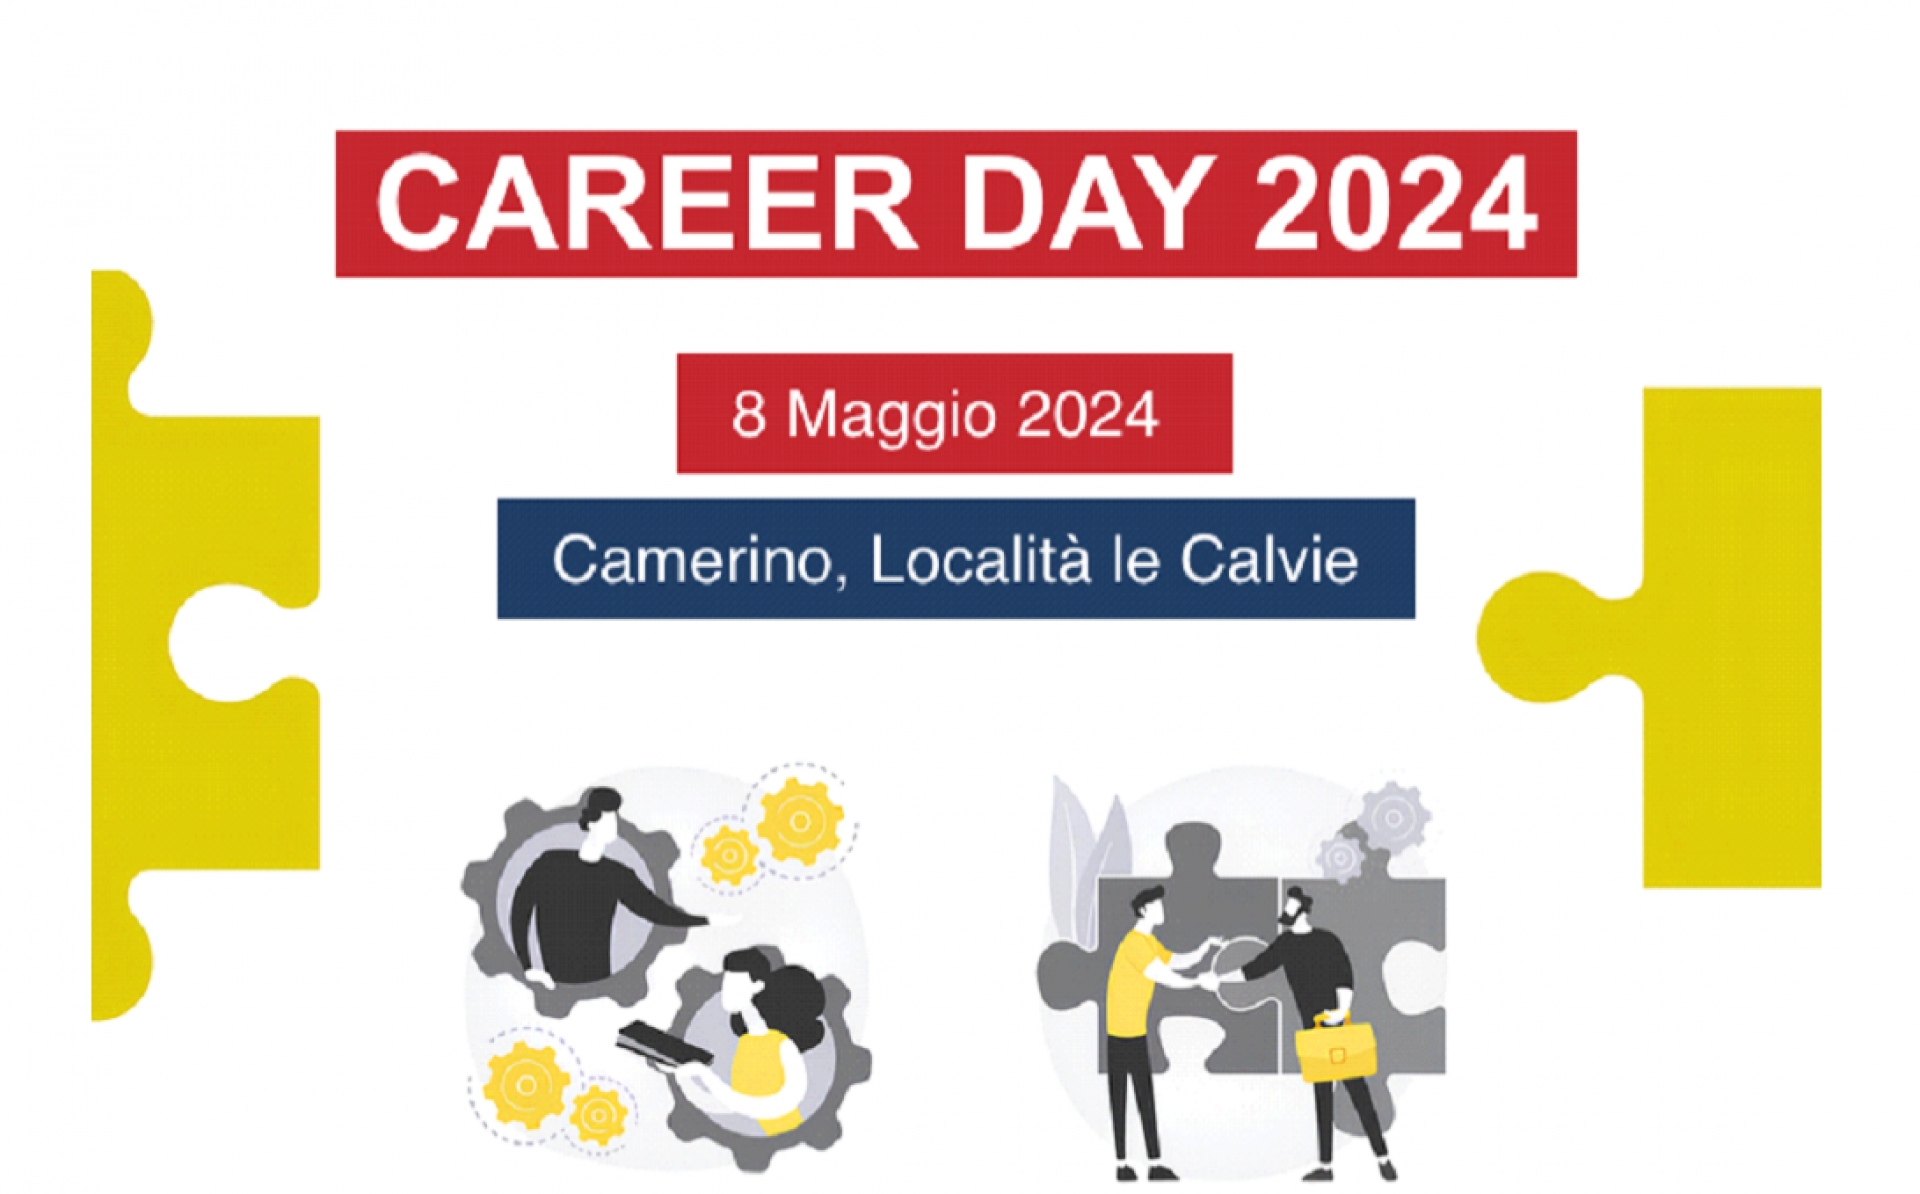 Career Day UNICAM - 8 Maggio 2024: registrati per partecipare!